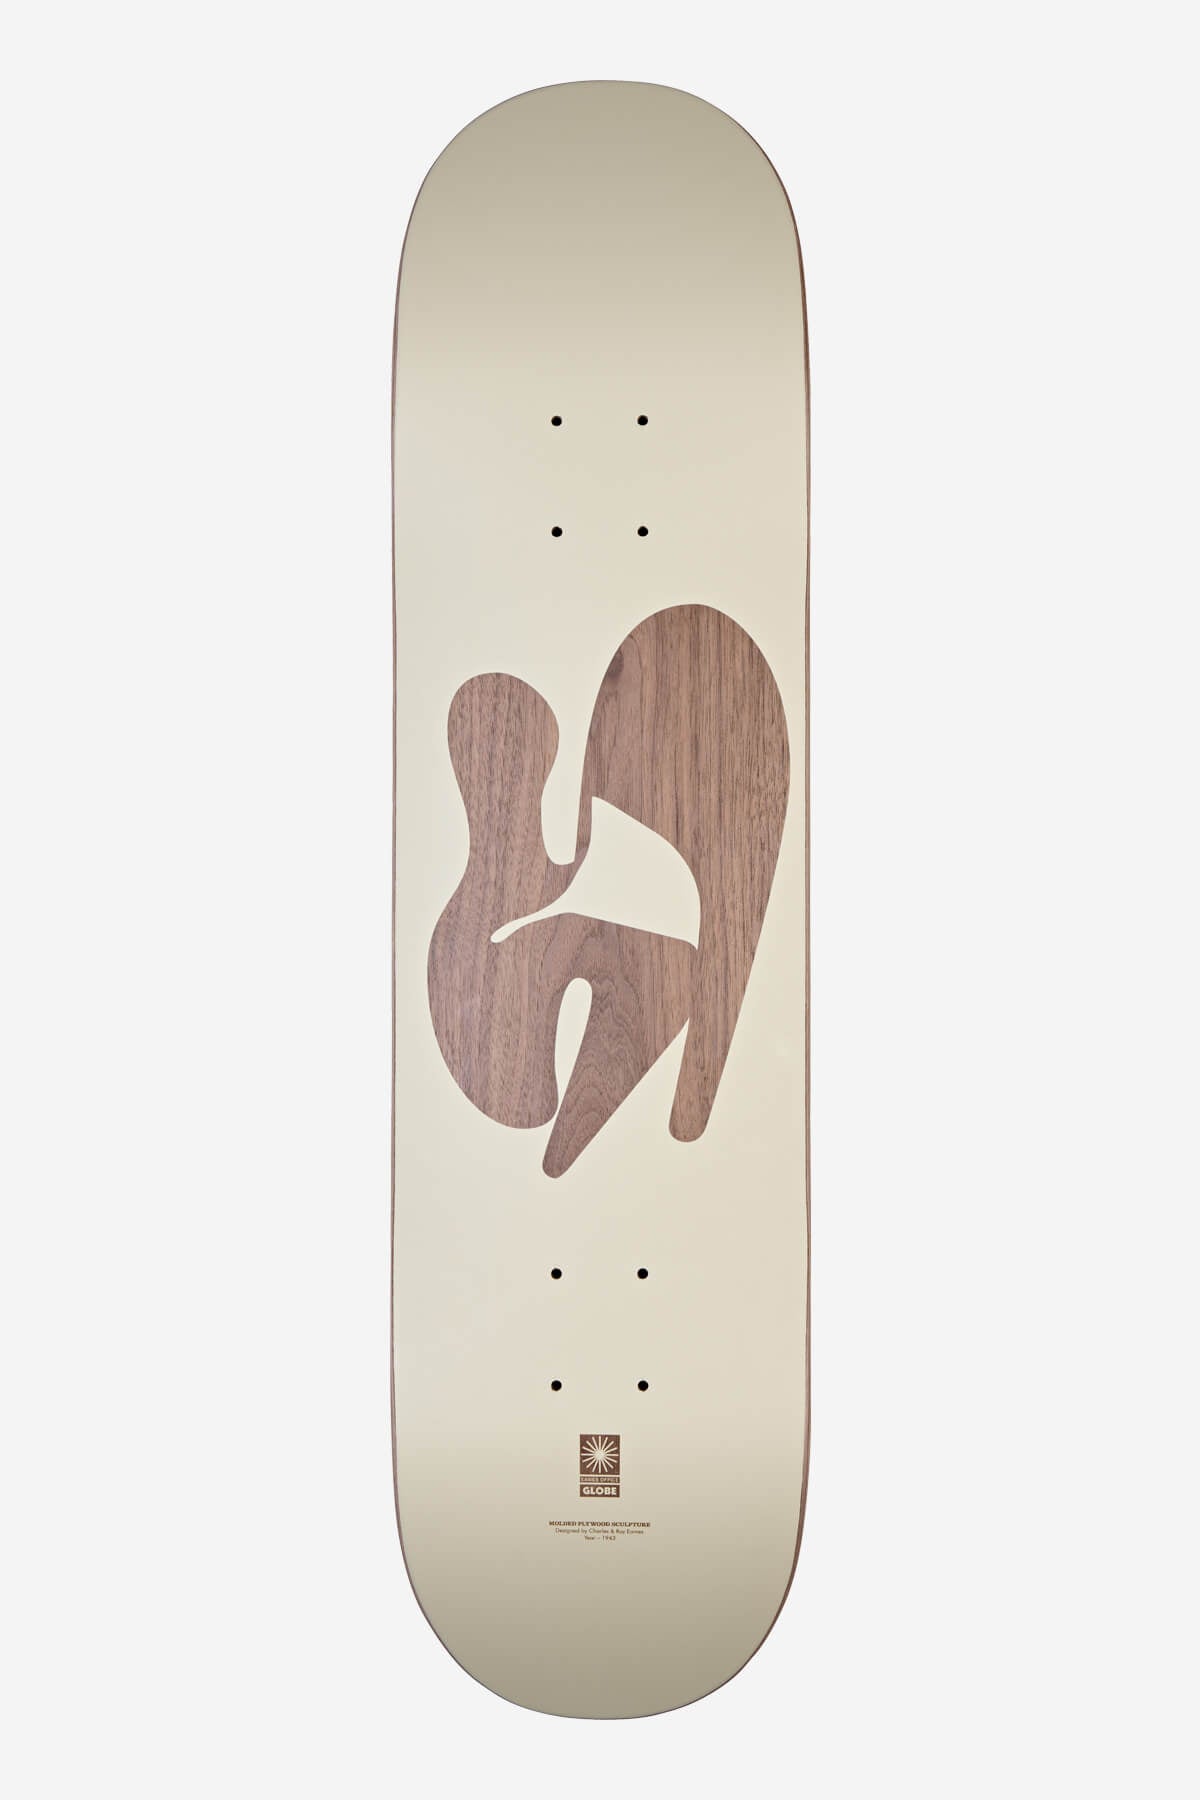 Globe - Eames Silhouette - Plywood Sculpture - 8.0" Skateboard Deck